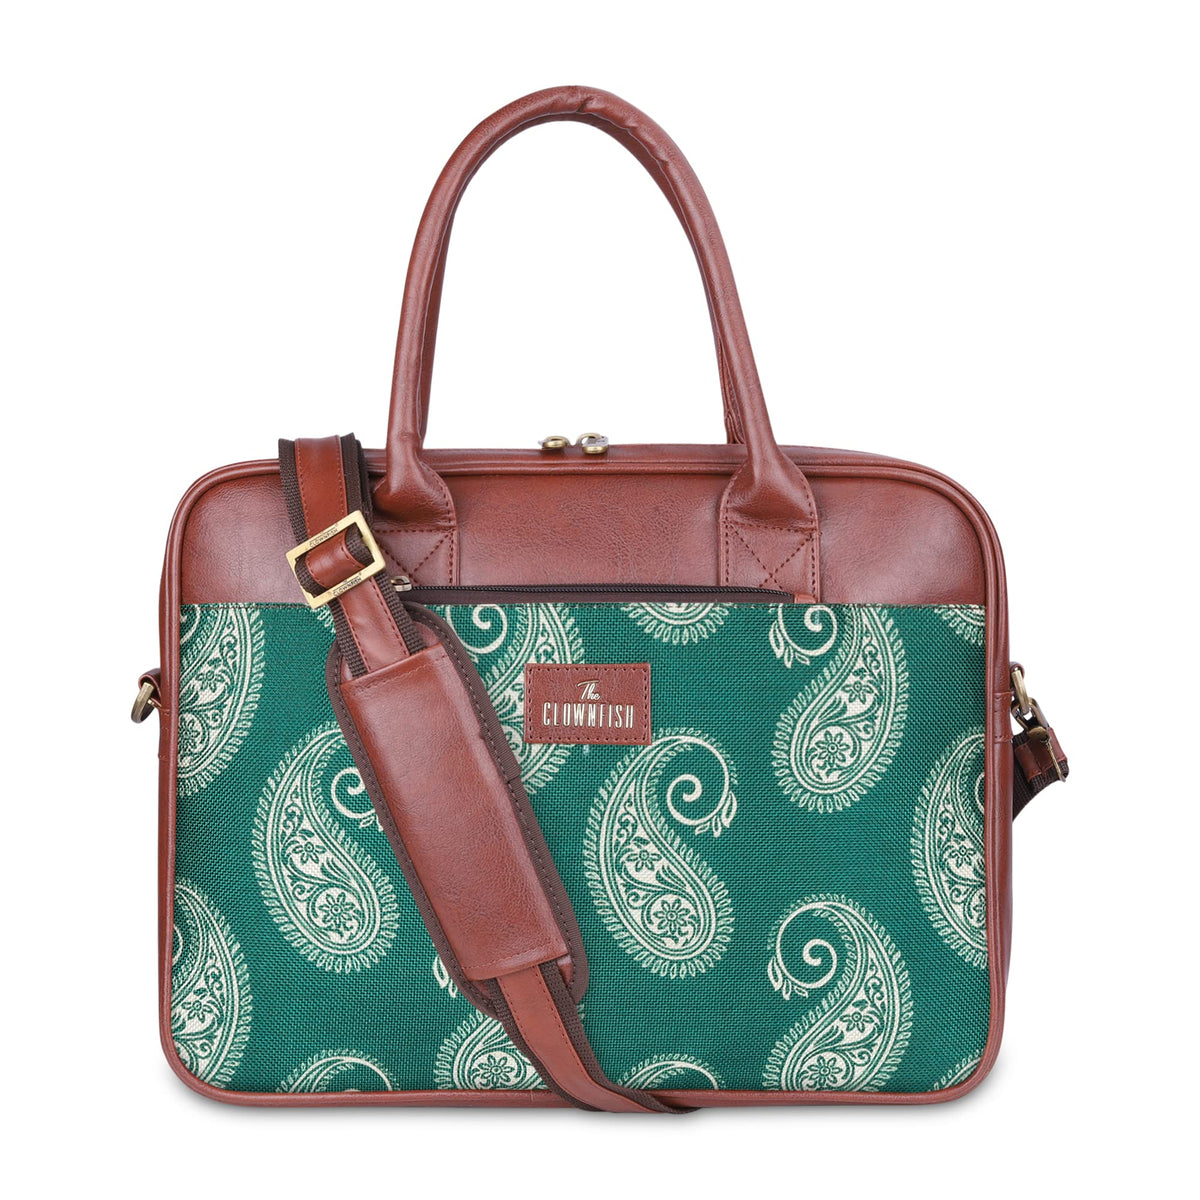 THE CLOWNFISH Deborah series 15.6 inch Laptop Bag For Women Printed Handicraft Fabric & Faux Leather Office Bag Briefcase Messenger Sling Handbag Business Bag (Fern Green)